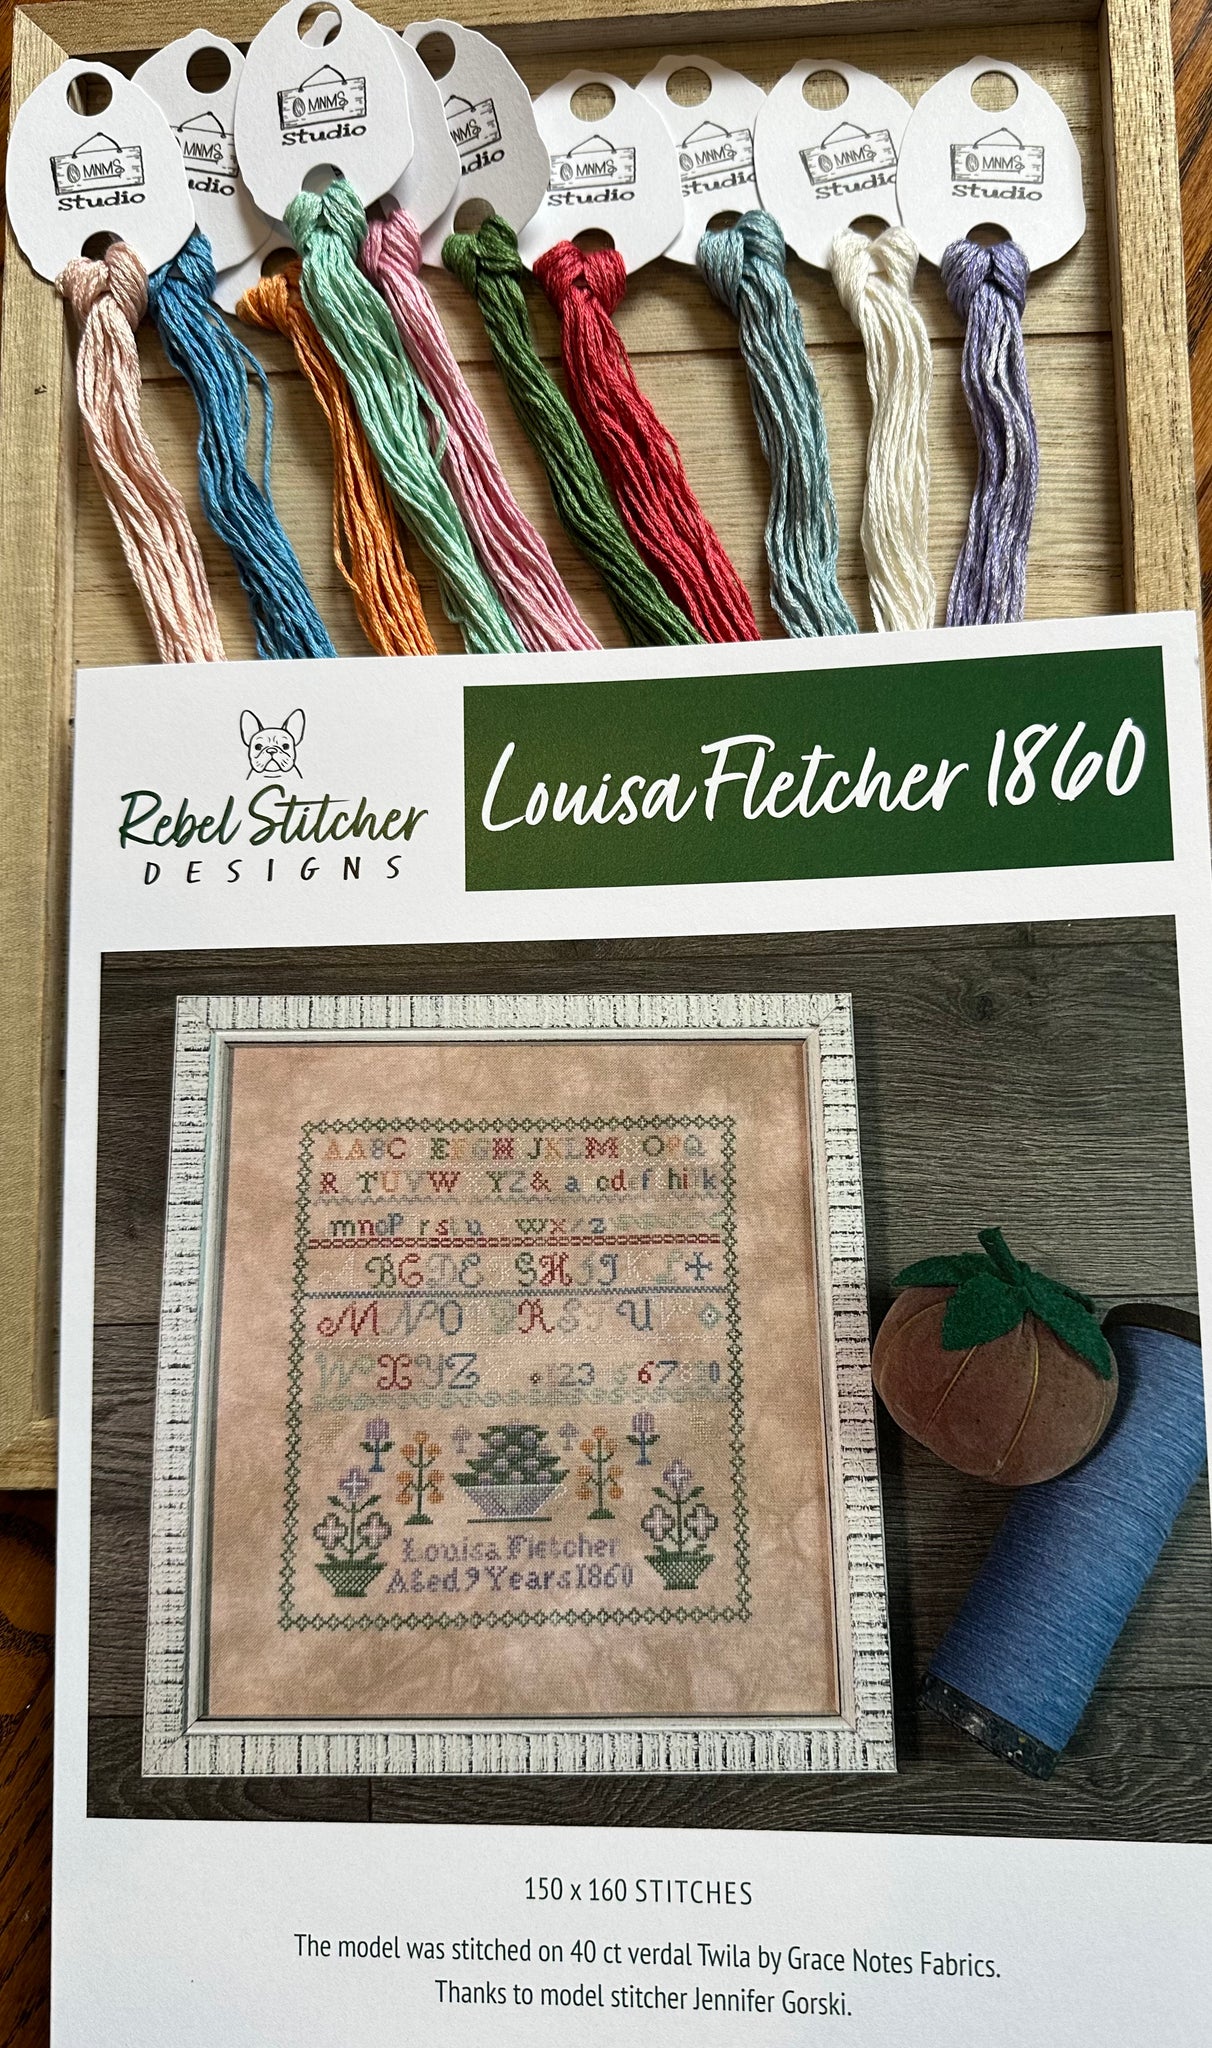 Louisa Fletcher chart and silk pack  by Rebel Stitcher Designs